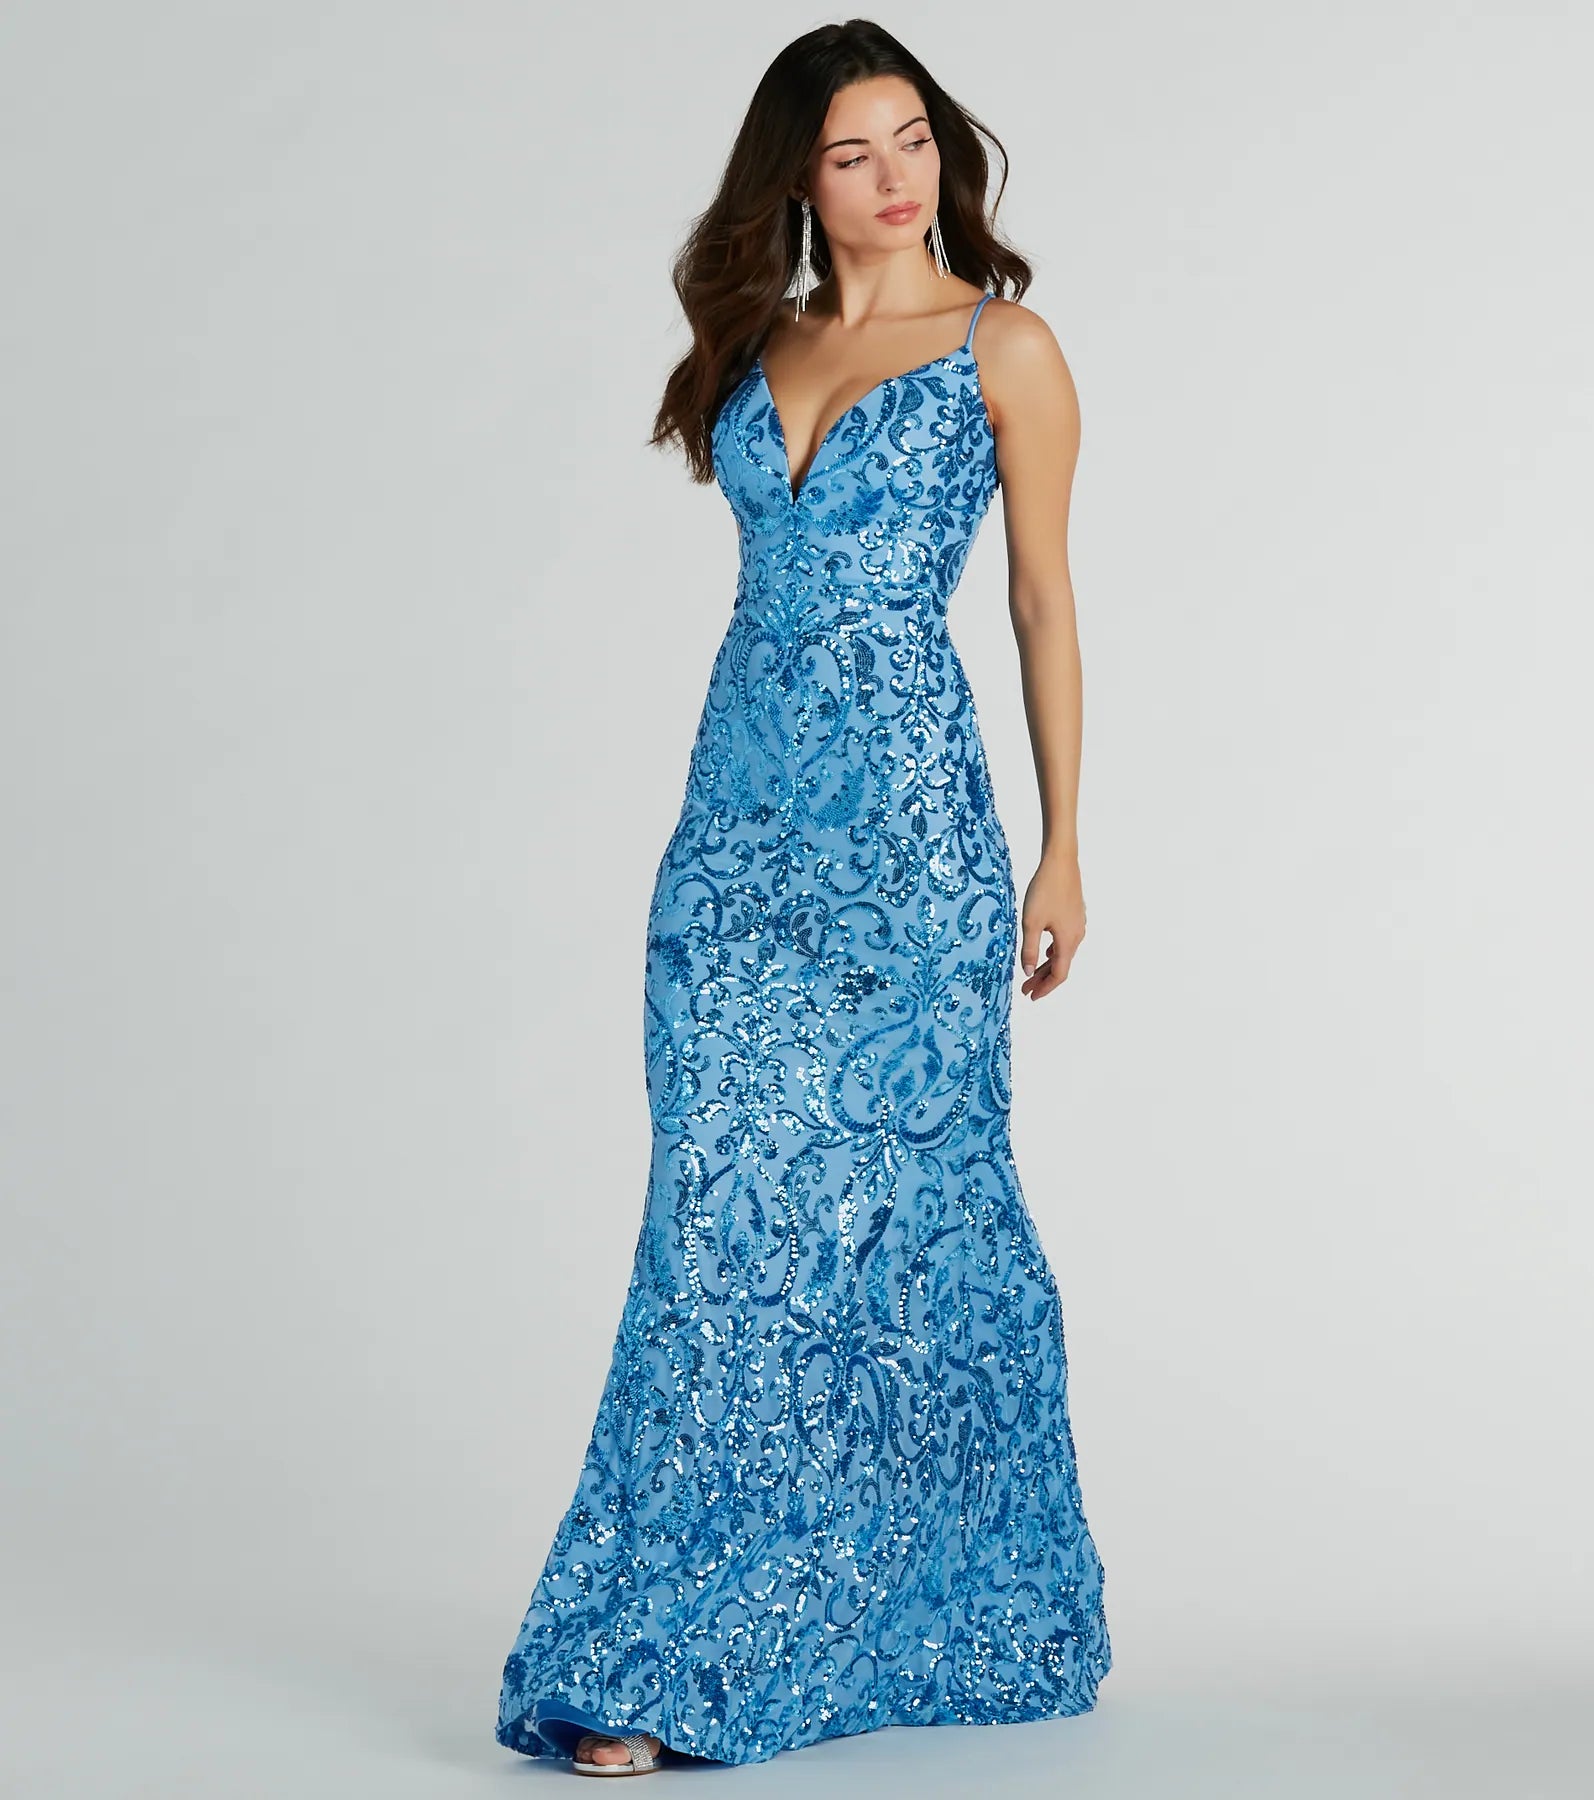 V-neck General Print Mesh Stretchy Sequined Sleeveless Spaghetti Strap Floor Length Mermaid Knit Prom Dress